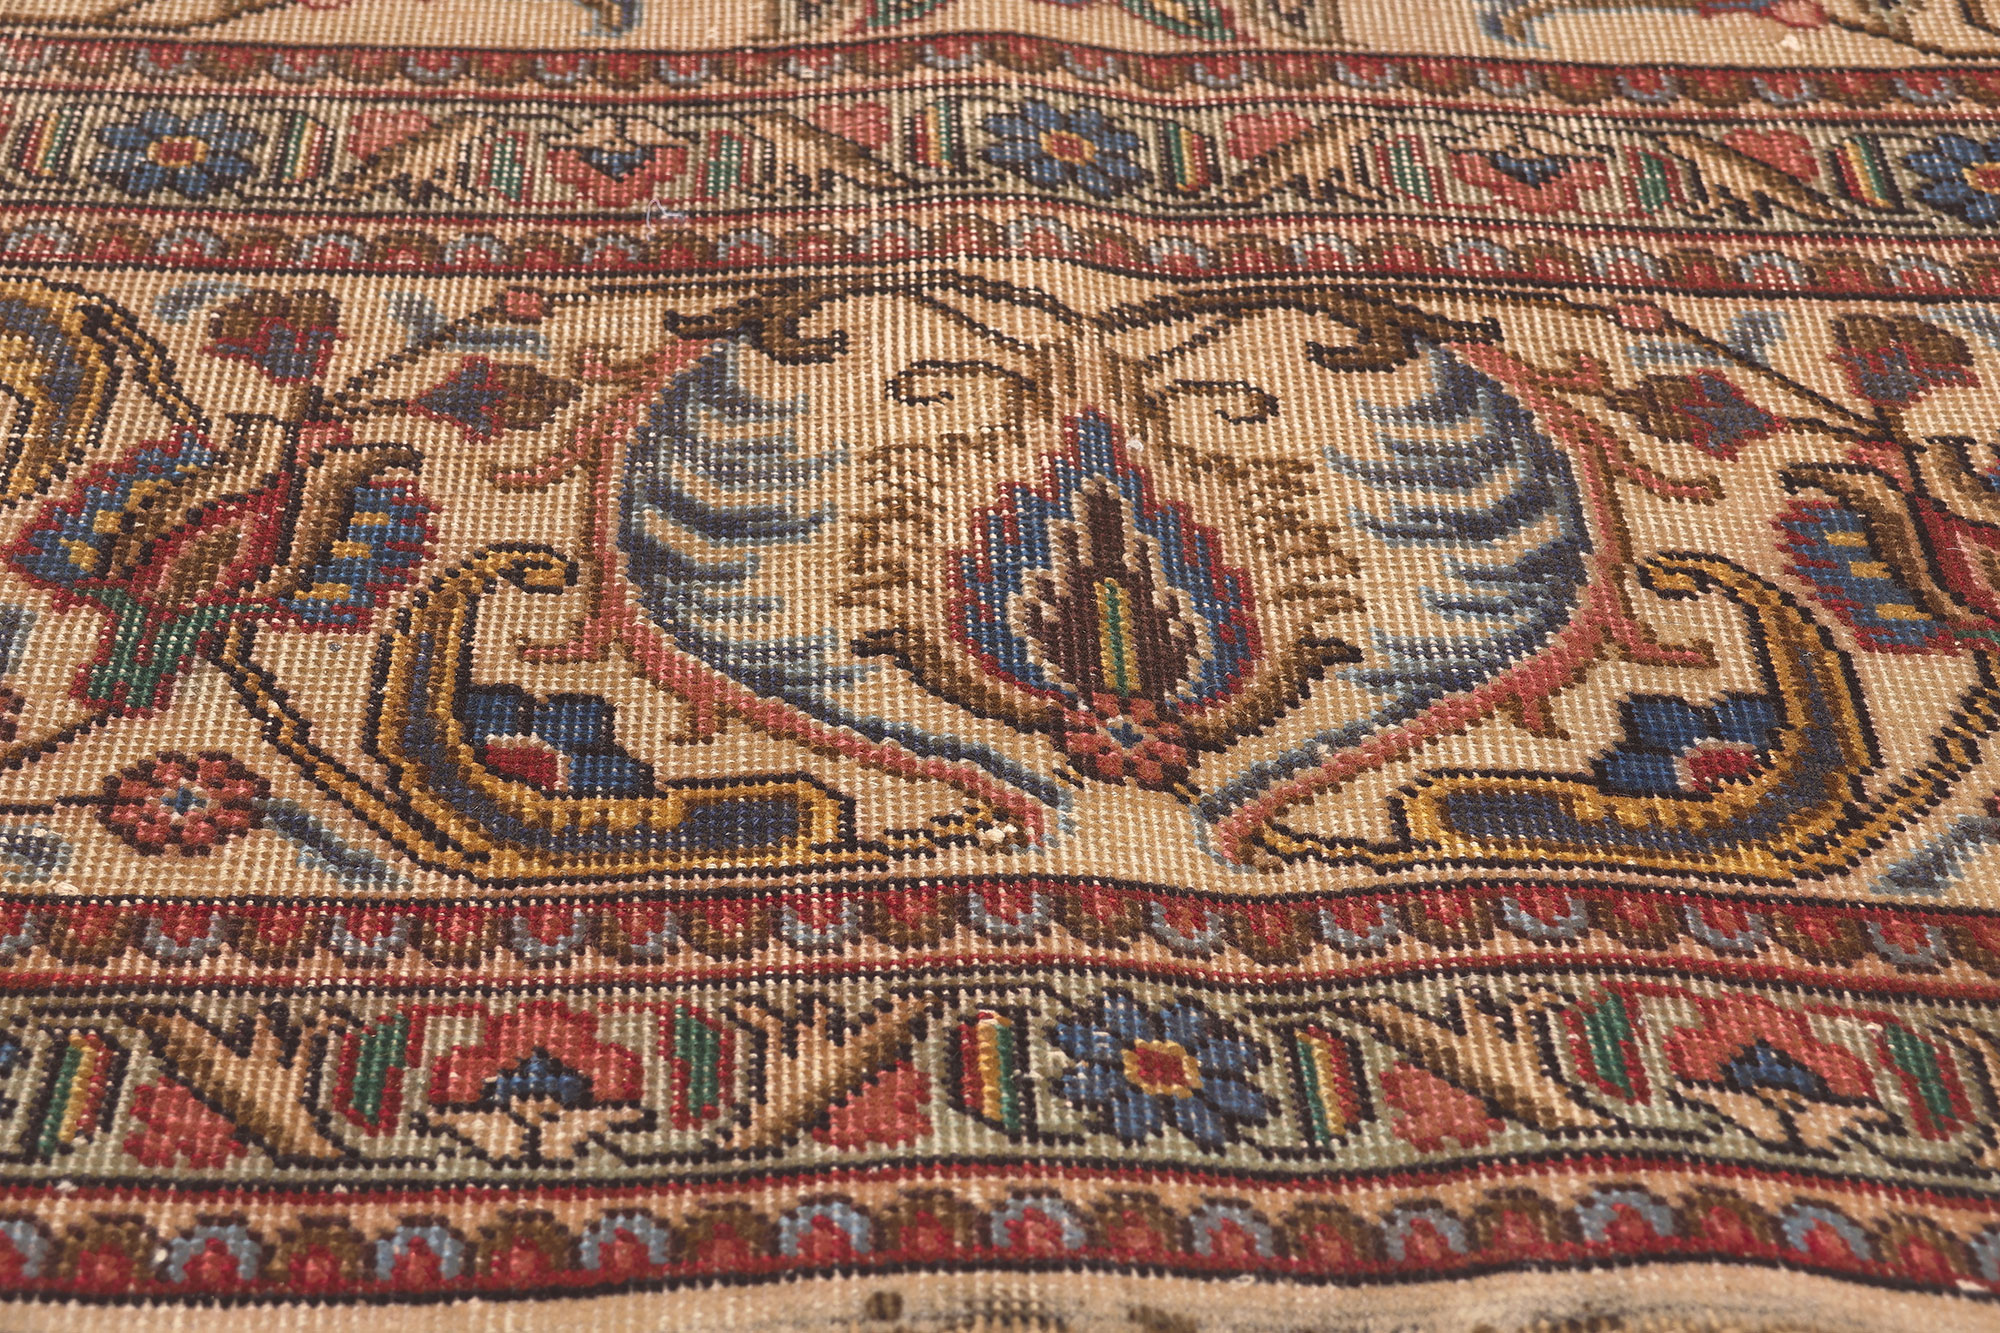 10 x 12 Antique-Worn Persian Tabriz Rug 74332